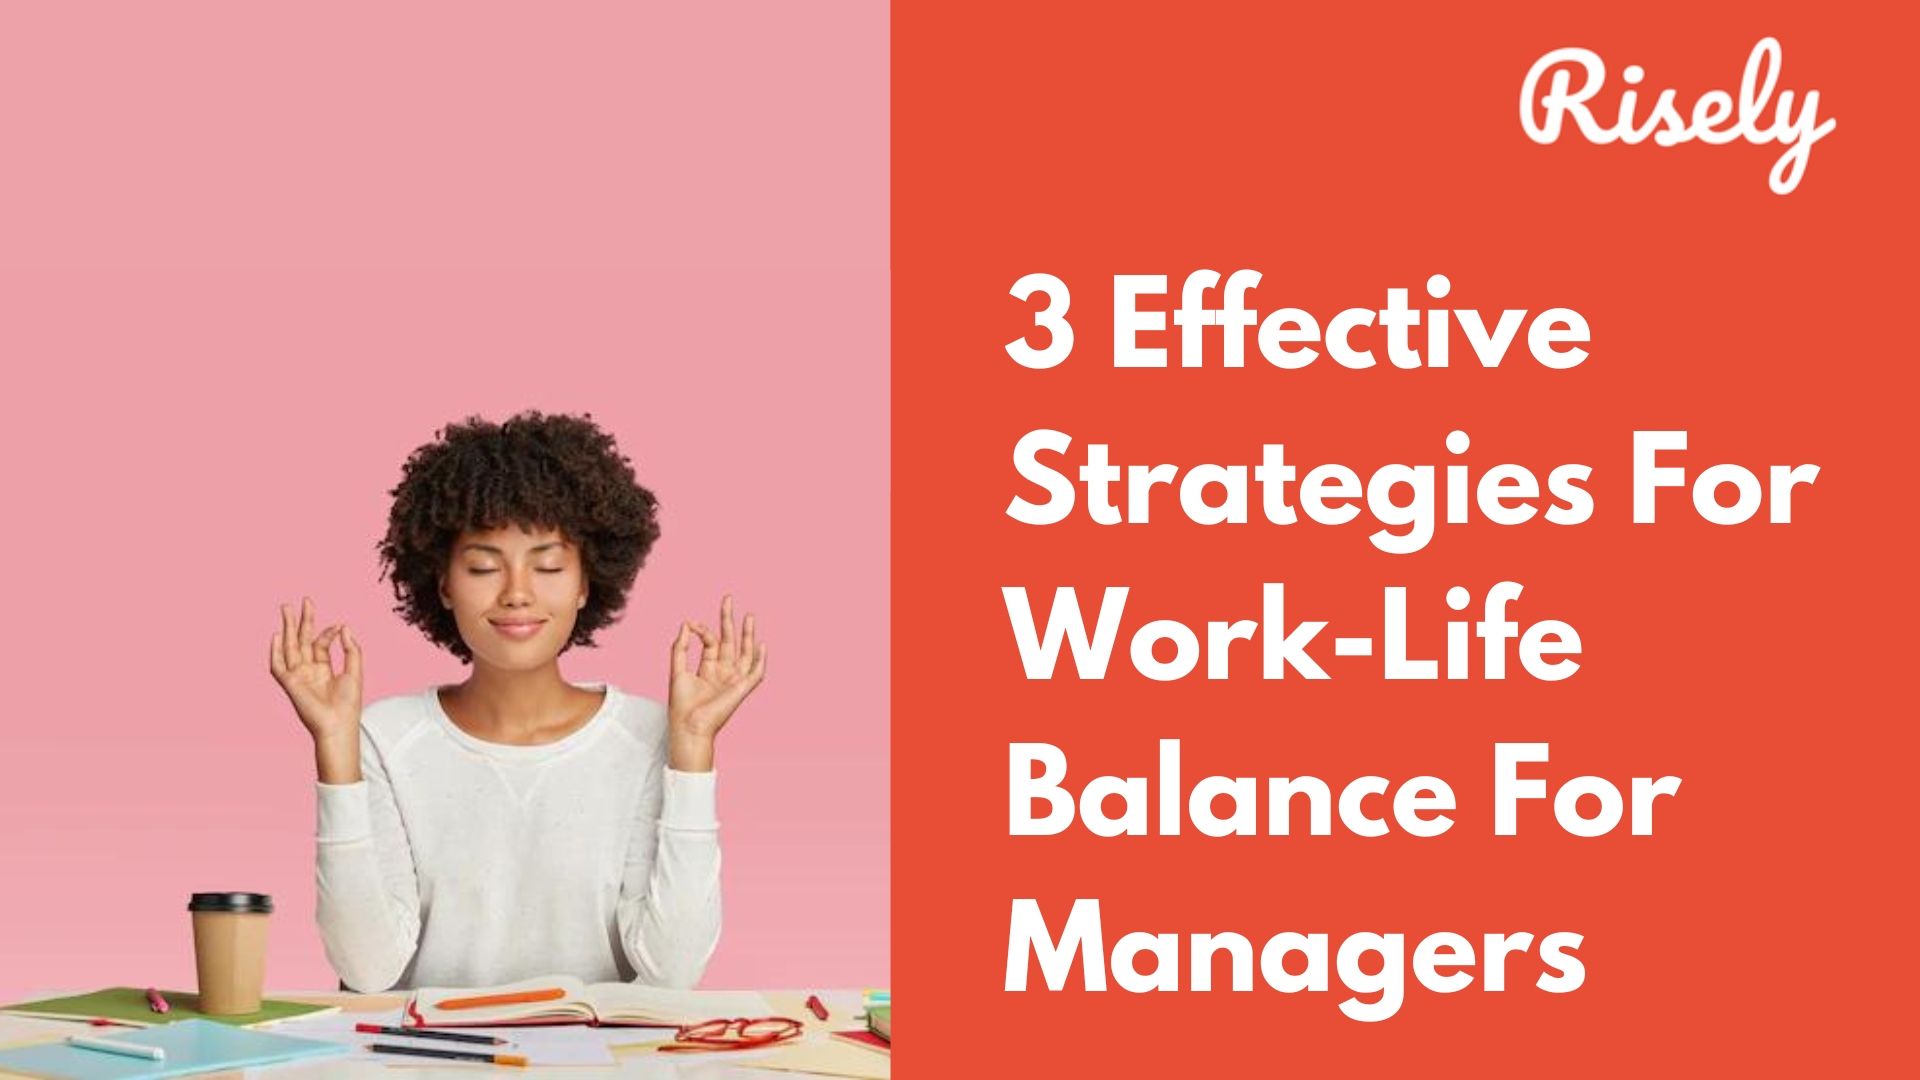 Strategies For Work-Life Balance